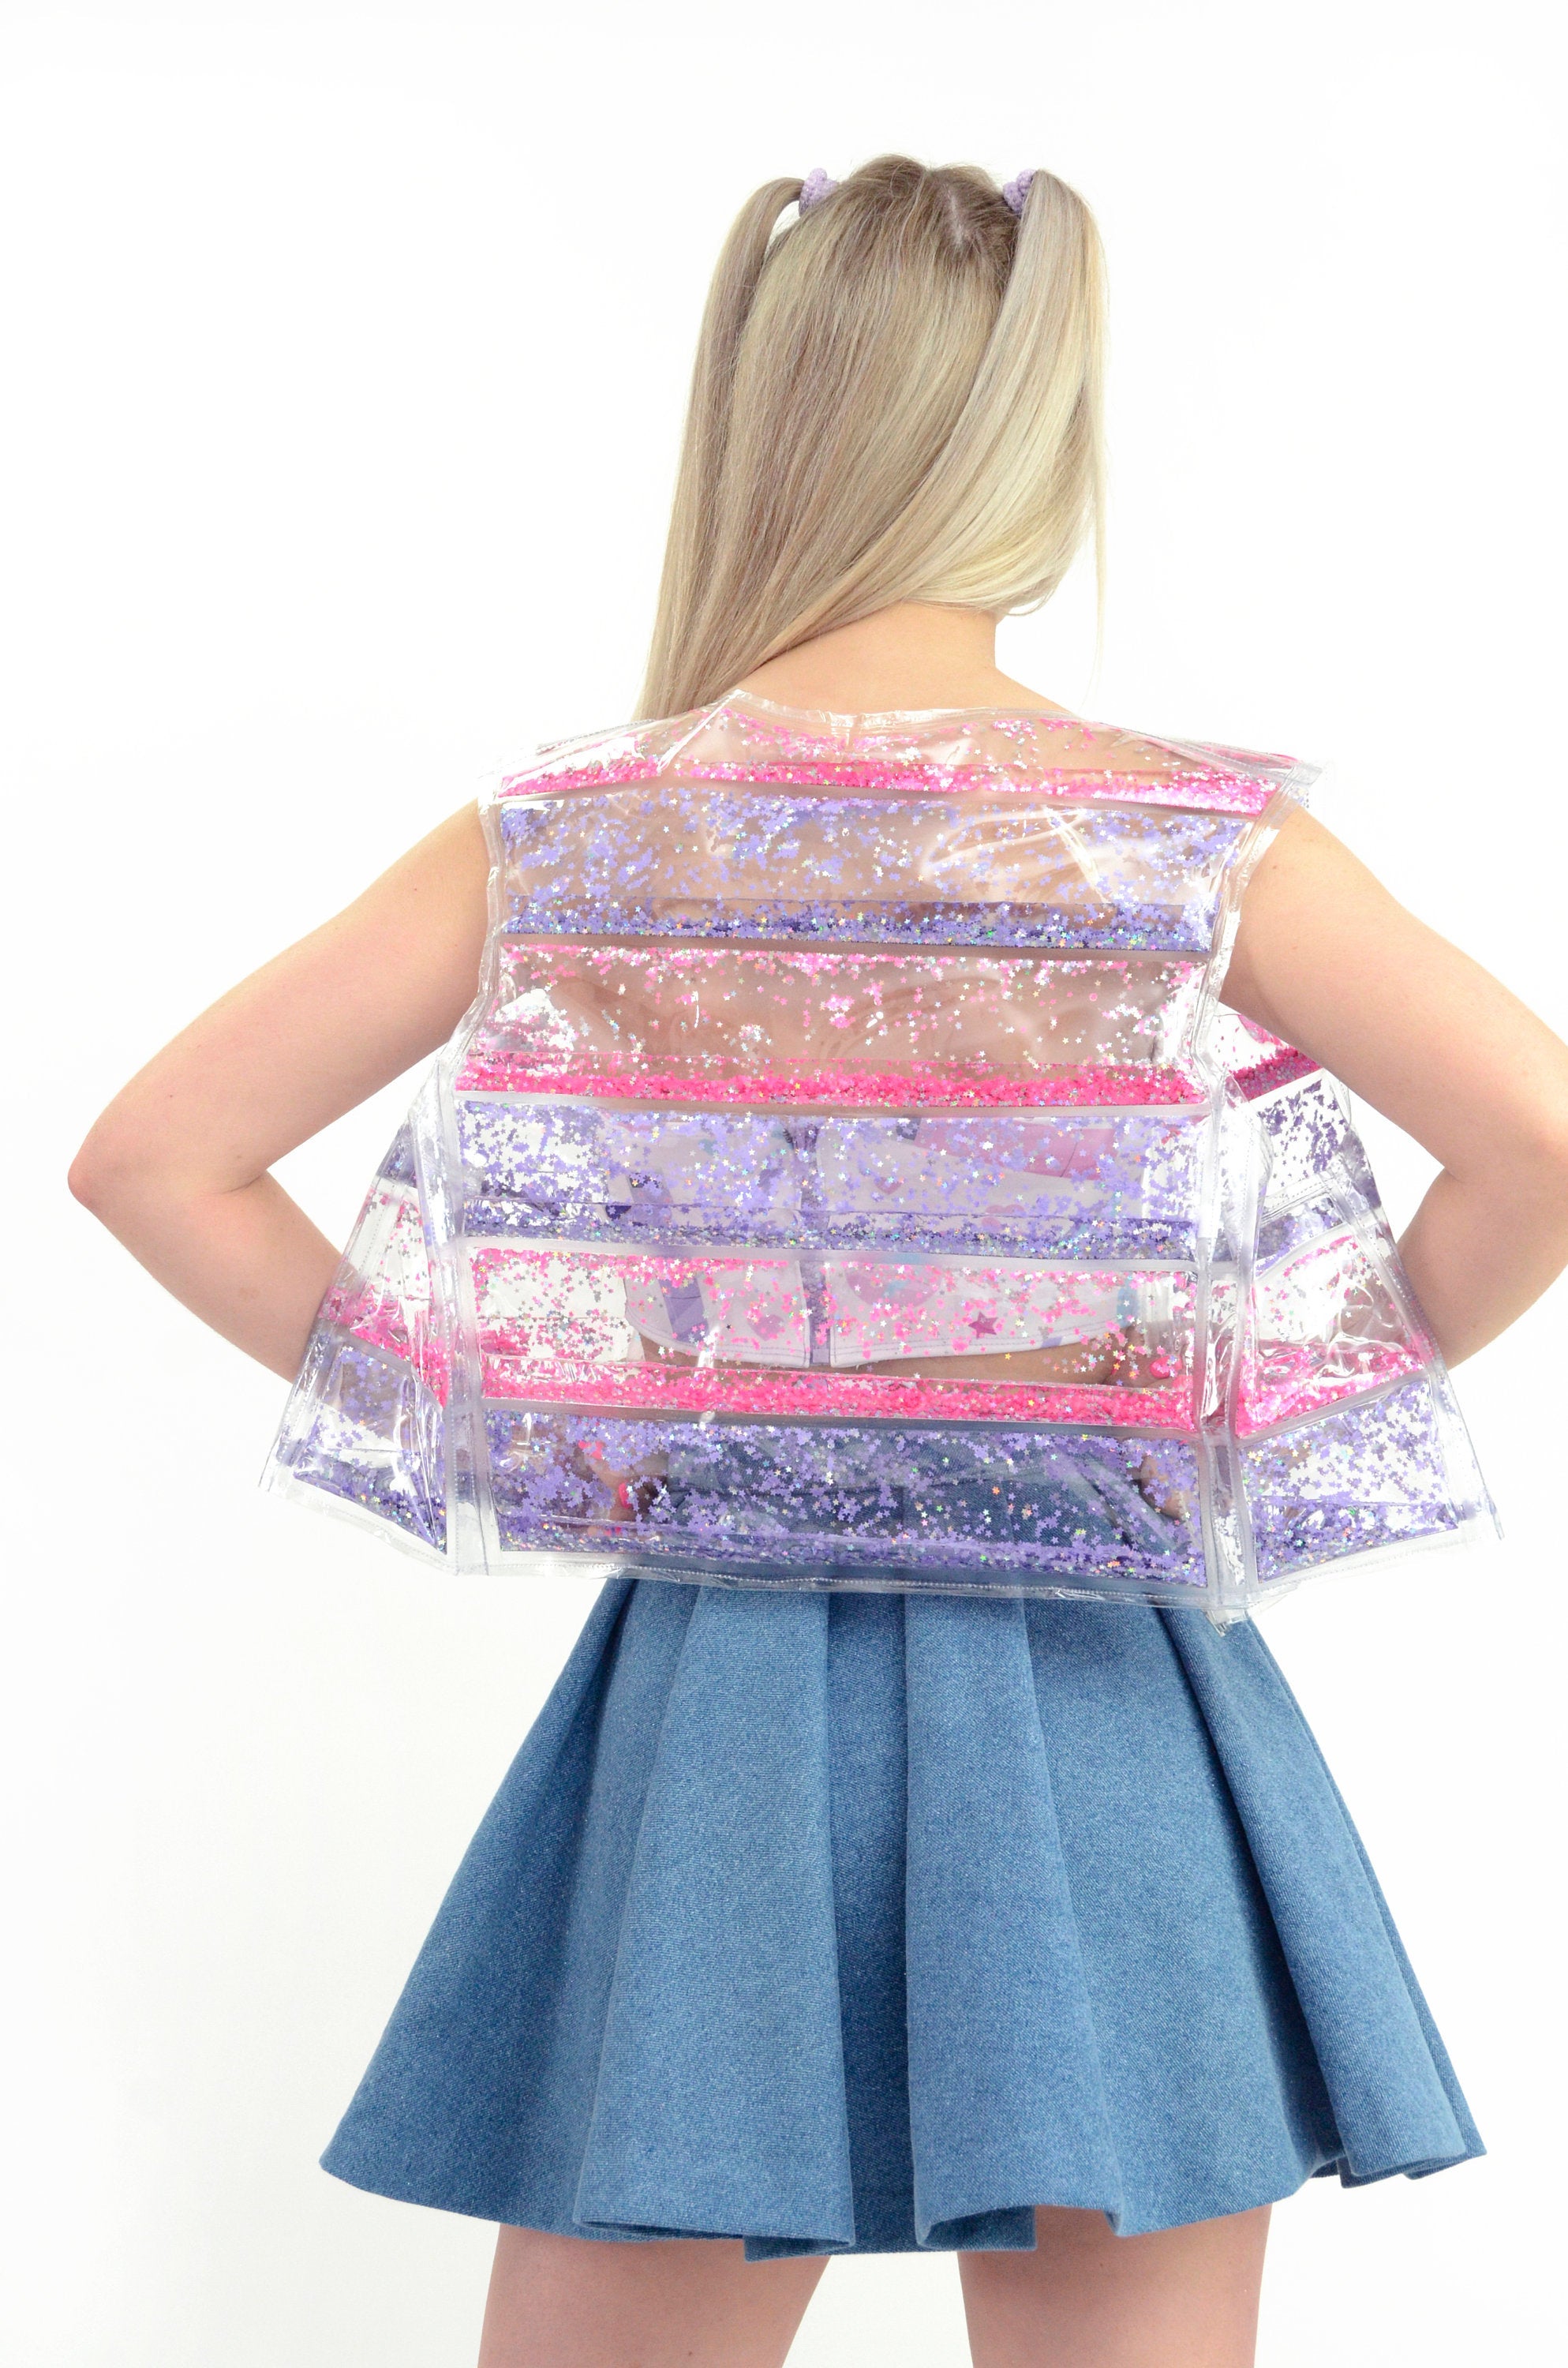 Liquid Glitter Puffer Vest - Atomic Pink/Purple - Holographic Vest - Transparent Vest